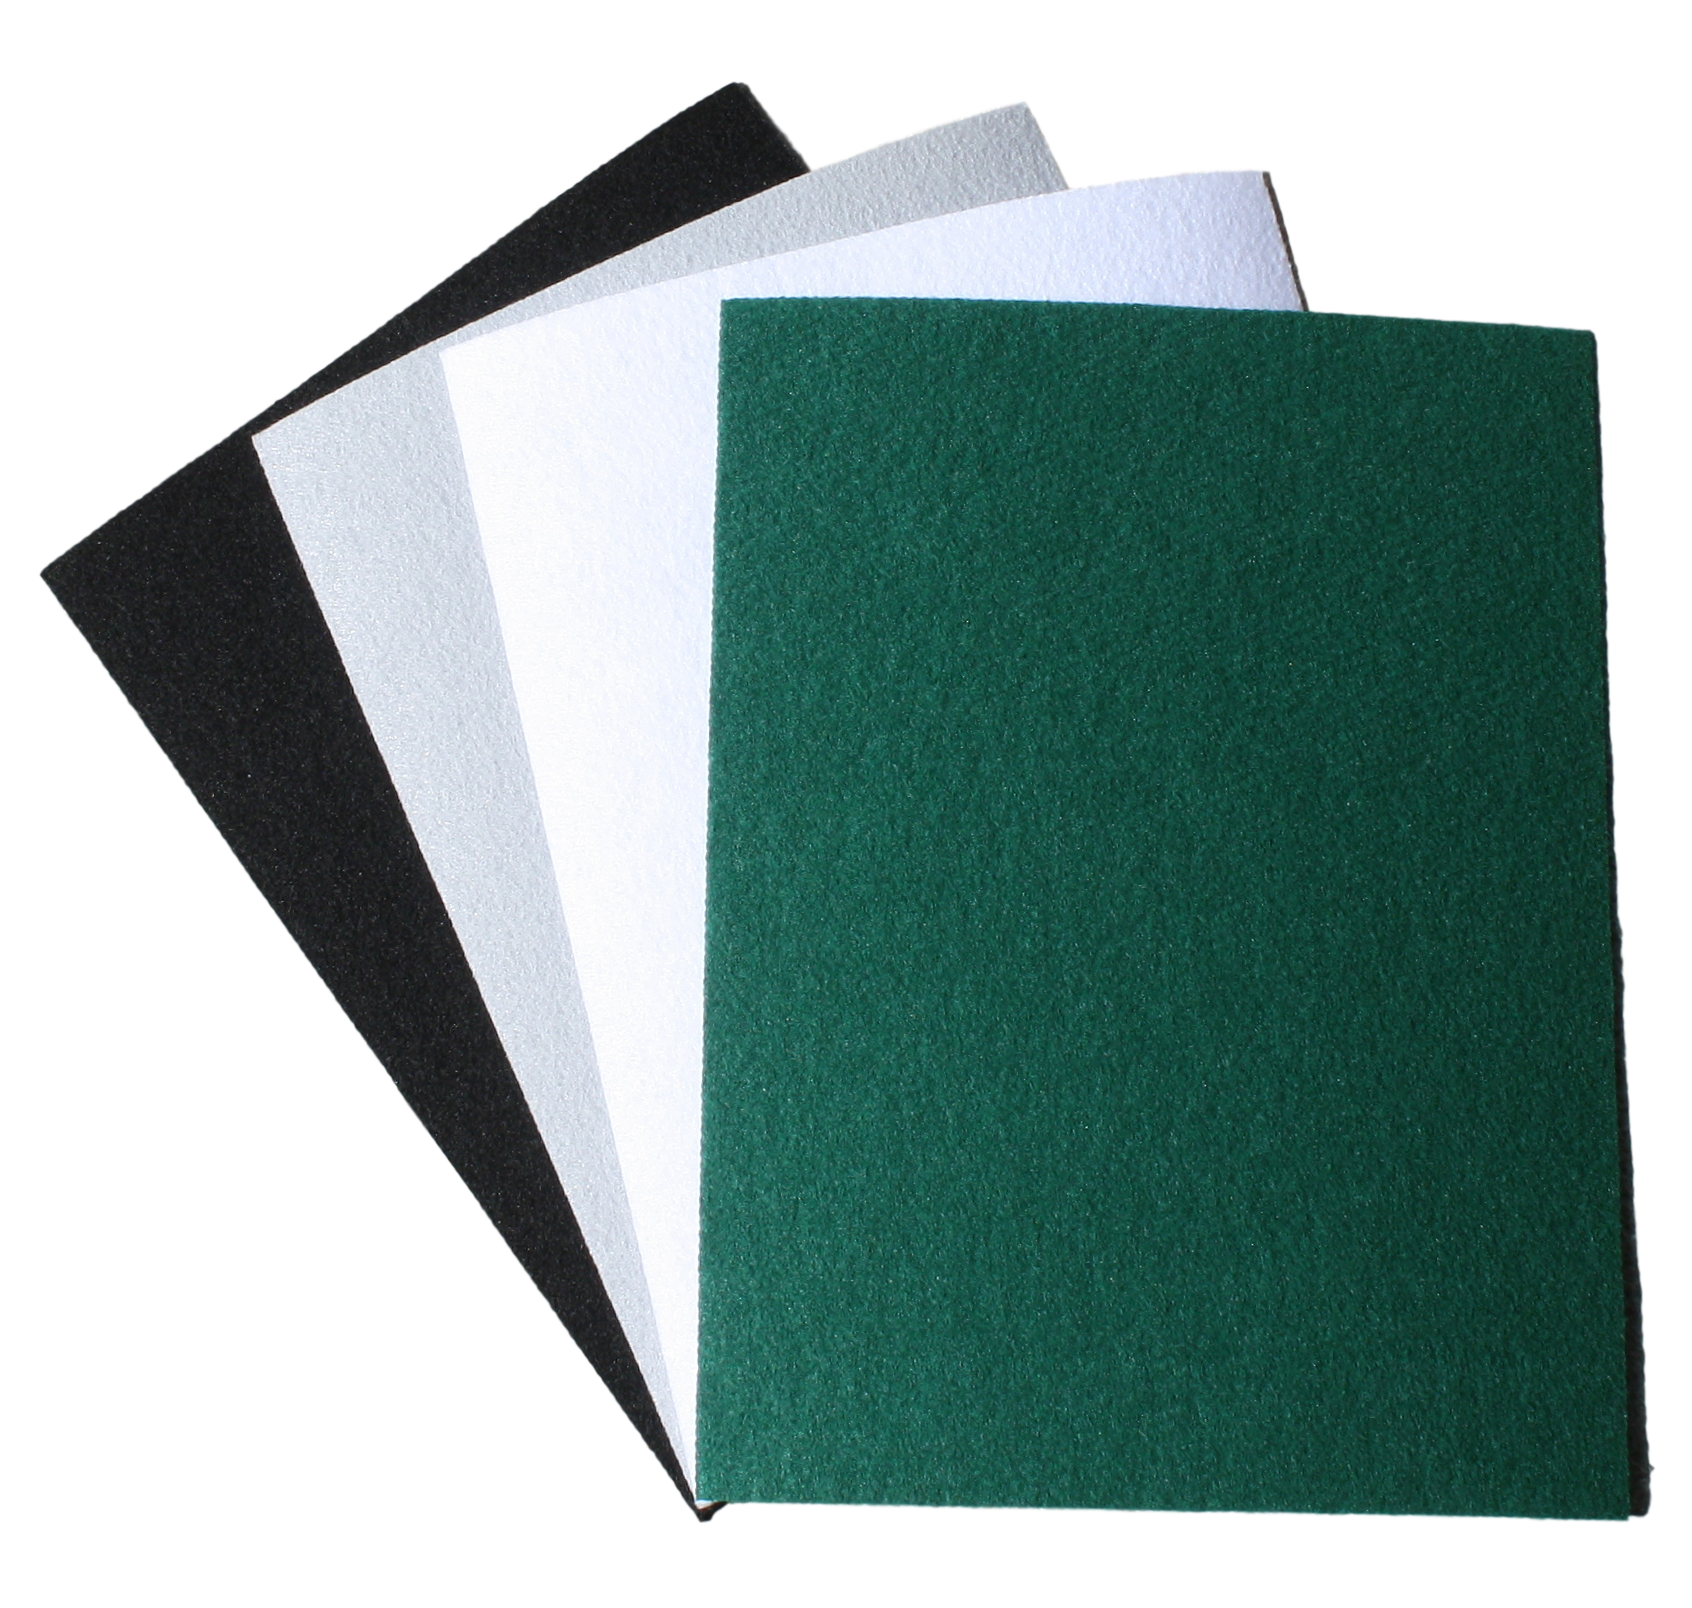 Hafele - Self-Adhesive Felt Sheets - 35-3/4 x 23 - Green